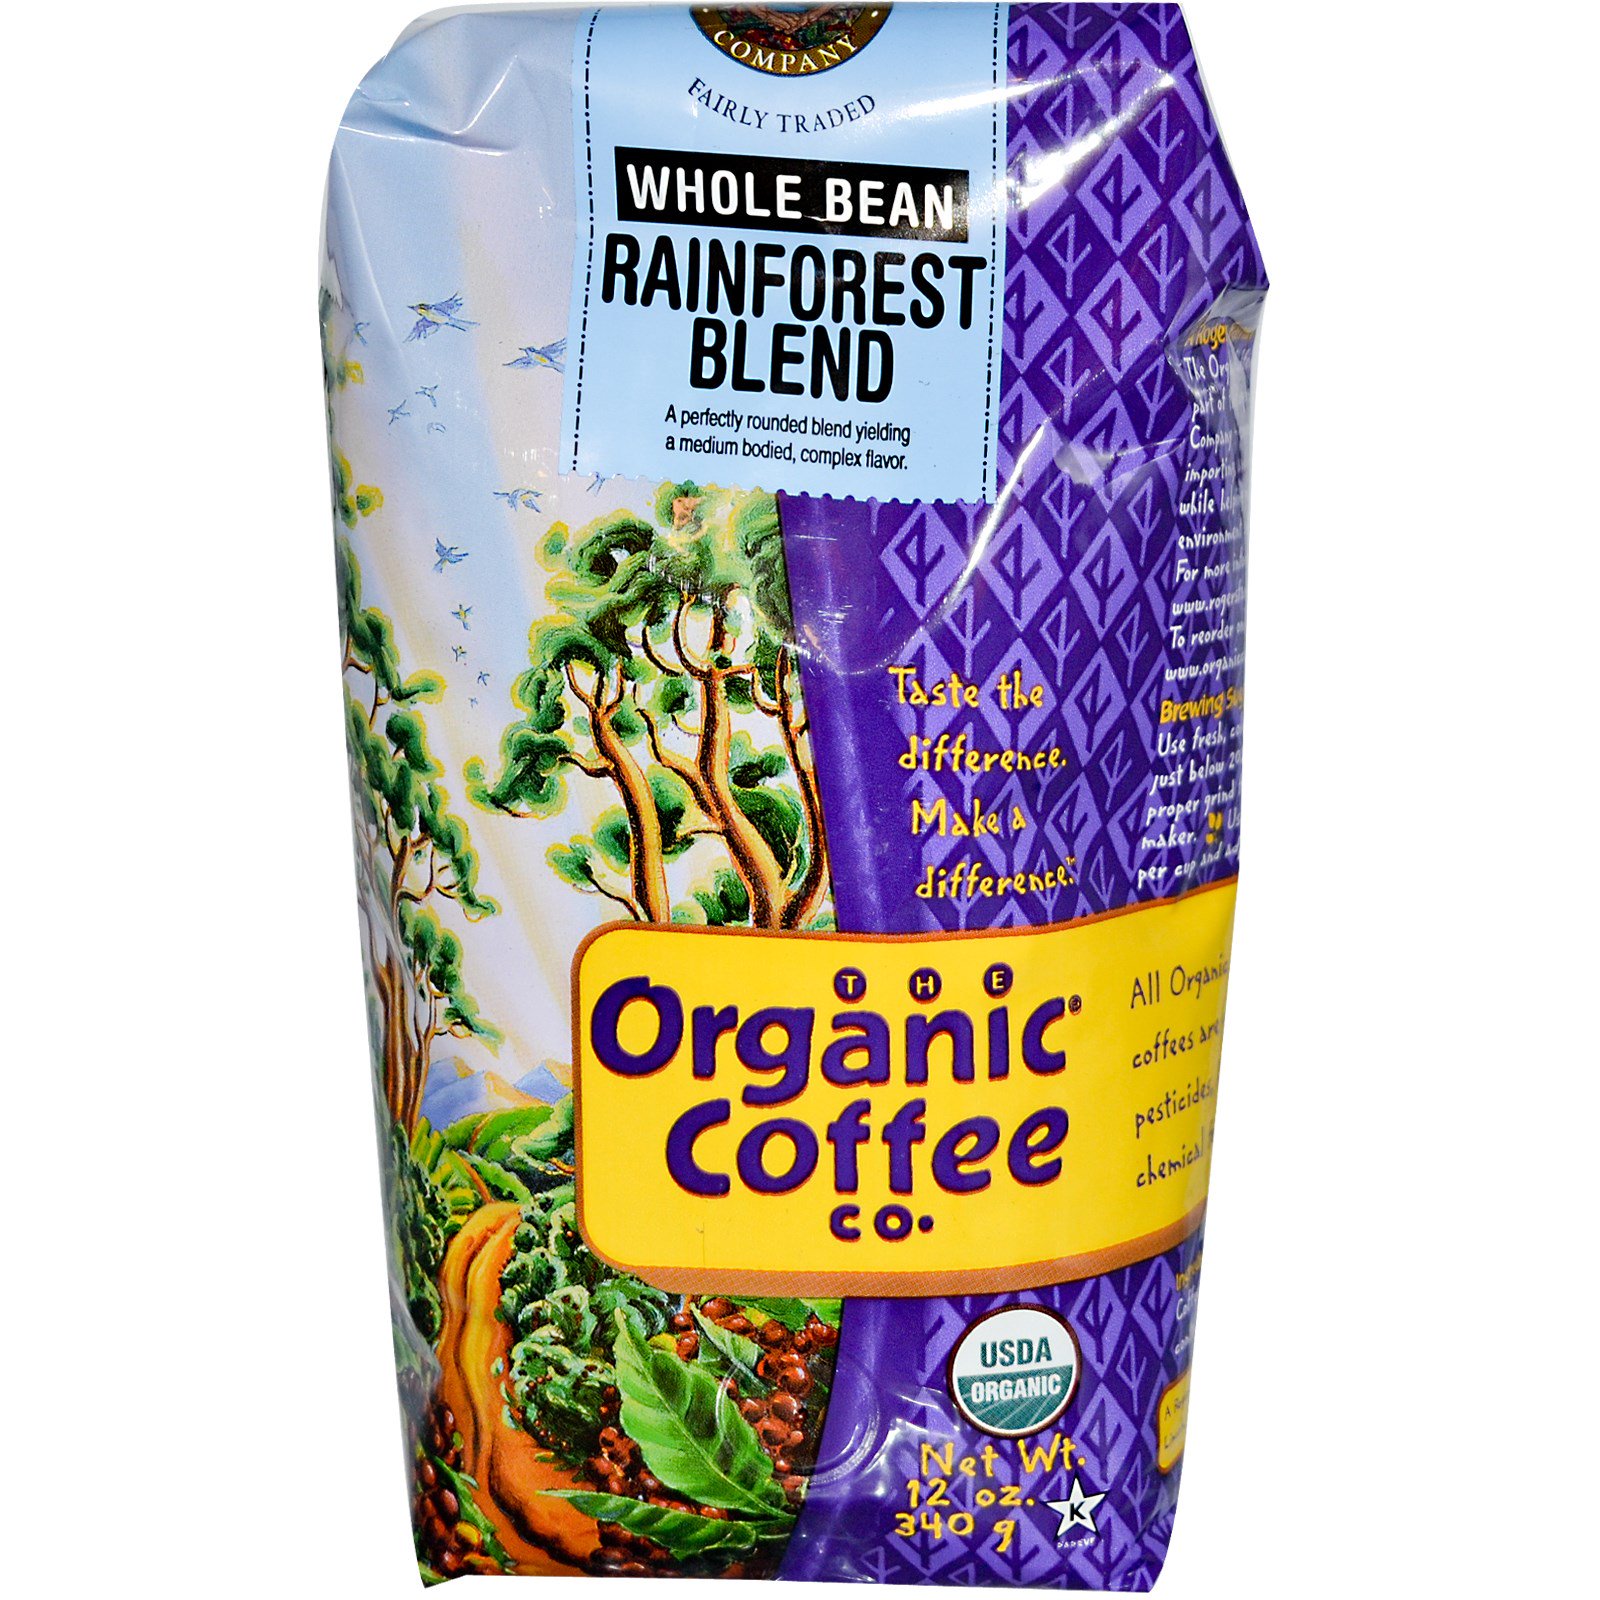  Organic Coffee  Co Rainforest Blend Whole Bean Coffee  